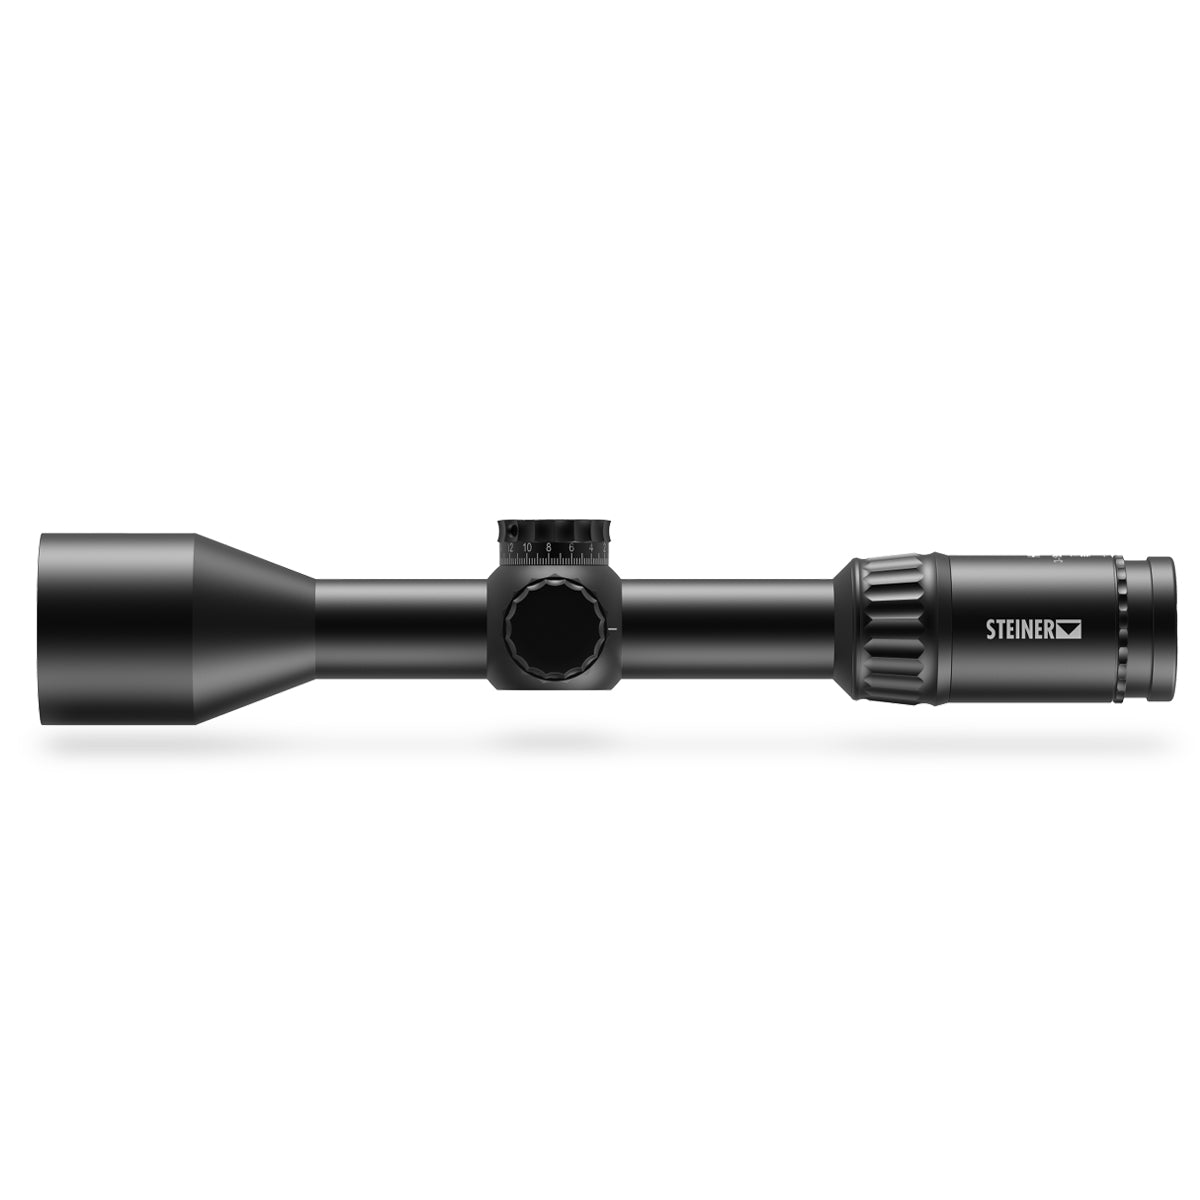 Steiner Optics H6Xi 3-18x50 MHR-MOA Riflescope in  by GOHUNT | Steiner Optics - GOHUNT Shop